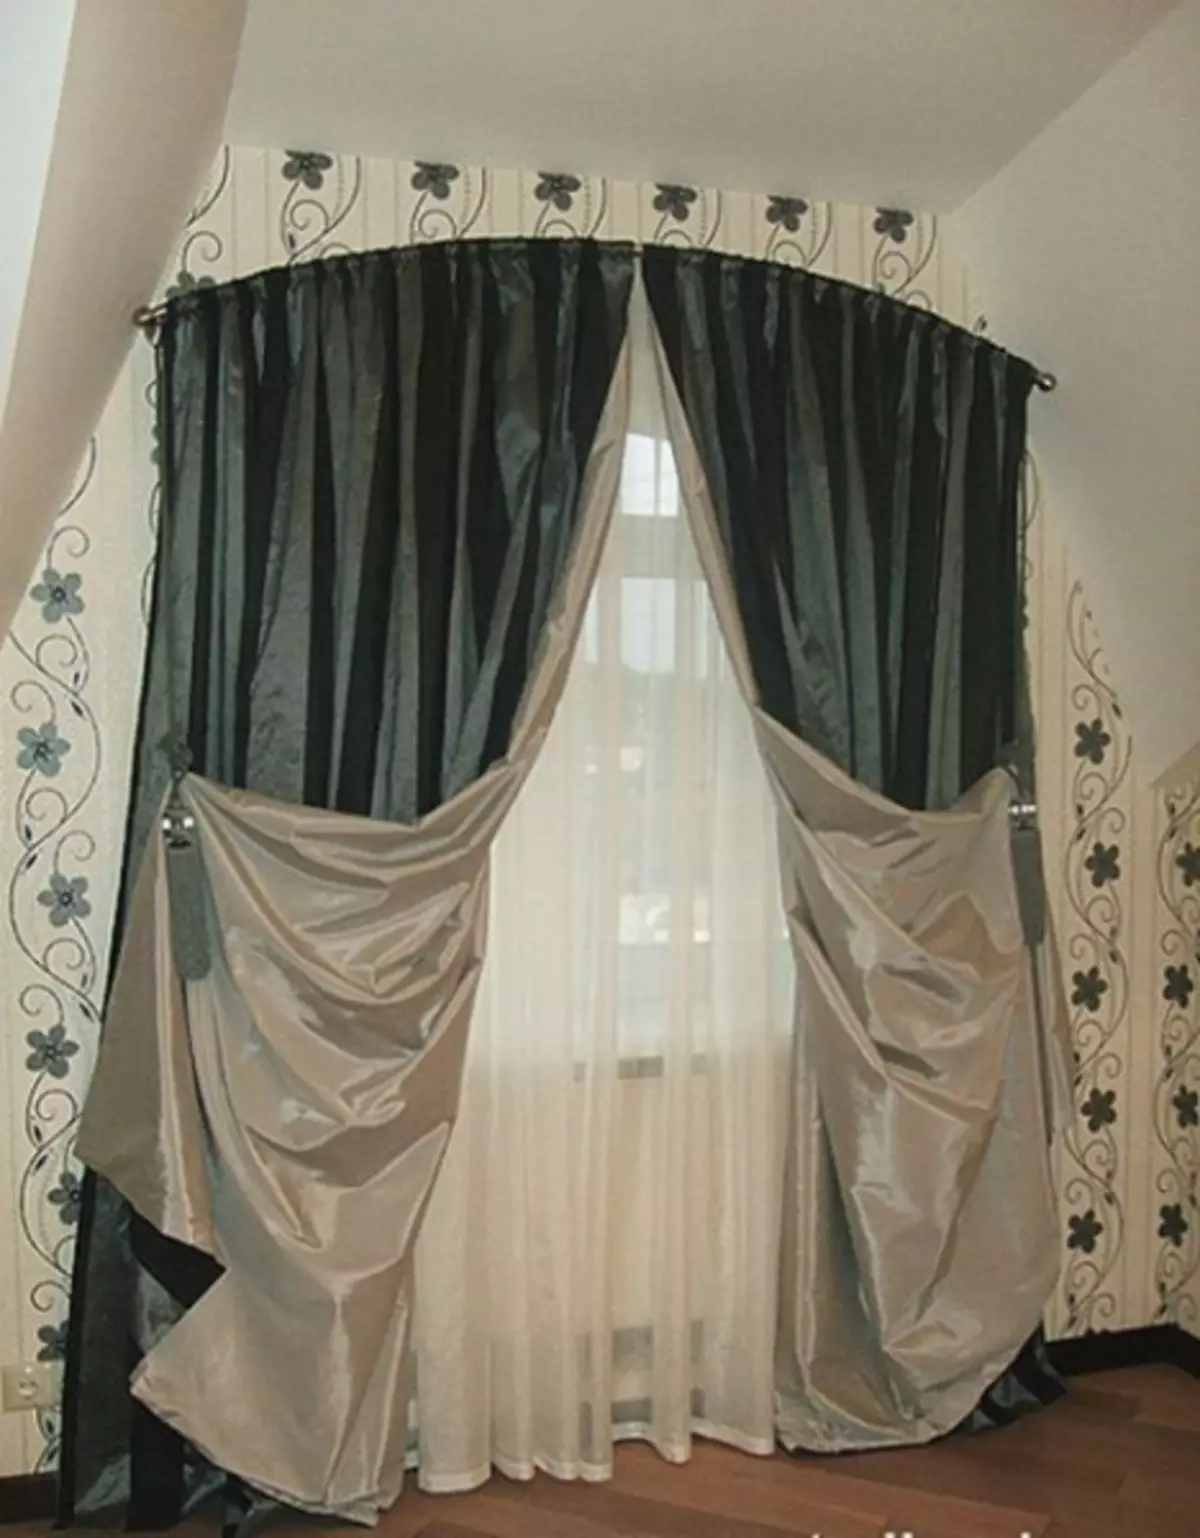 Mitemo yeCurming Curtains pane Lining: Professional Master Class